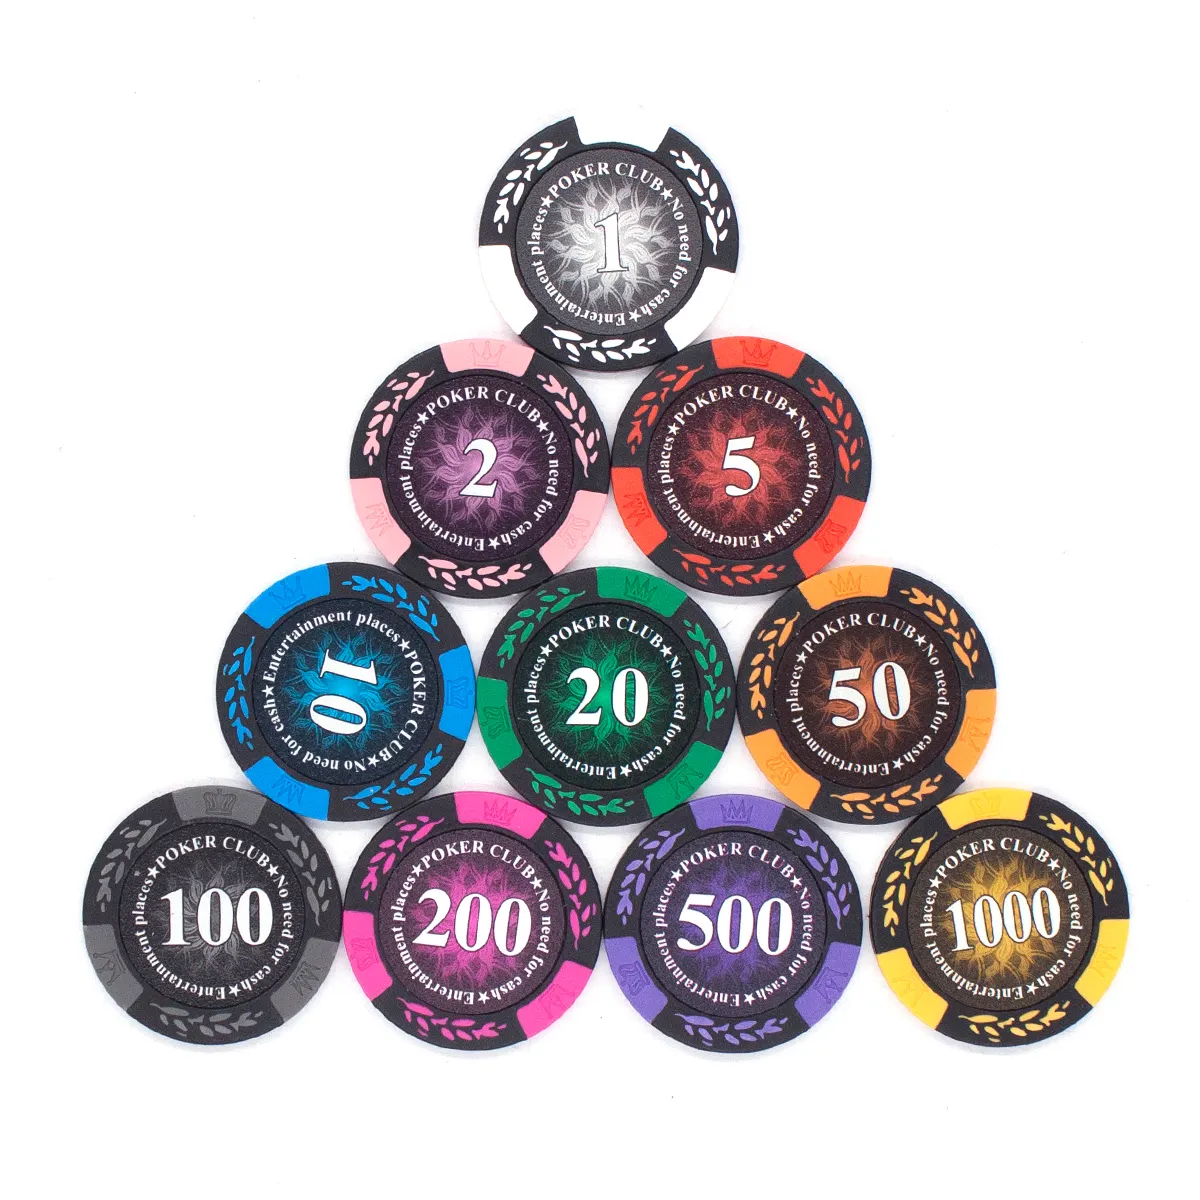 Toptan fiyat yüksek kalite özel boş Poker cips Casino kil seramik poker cips 14g